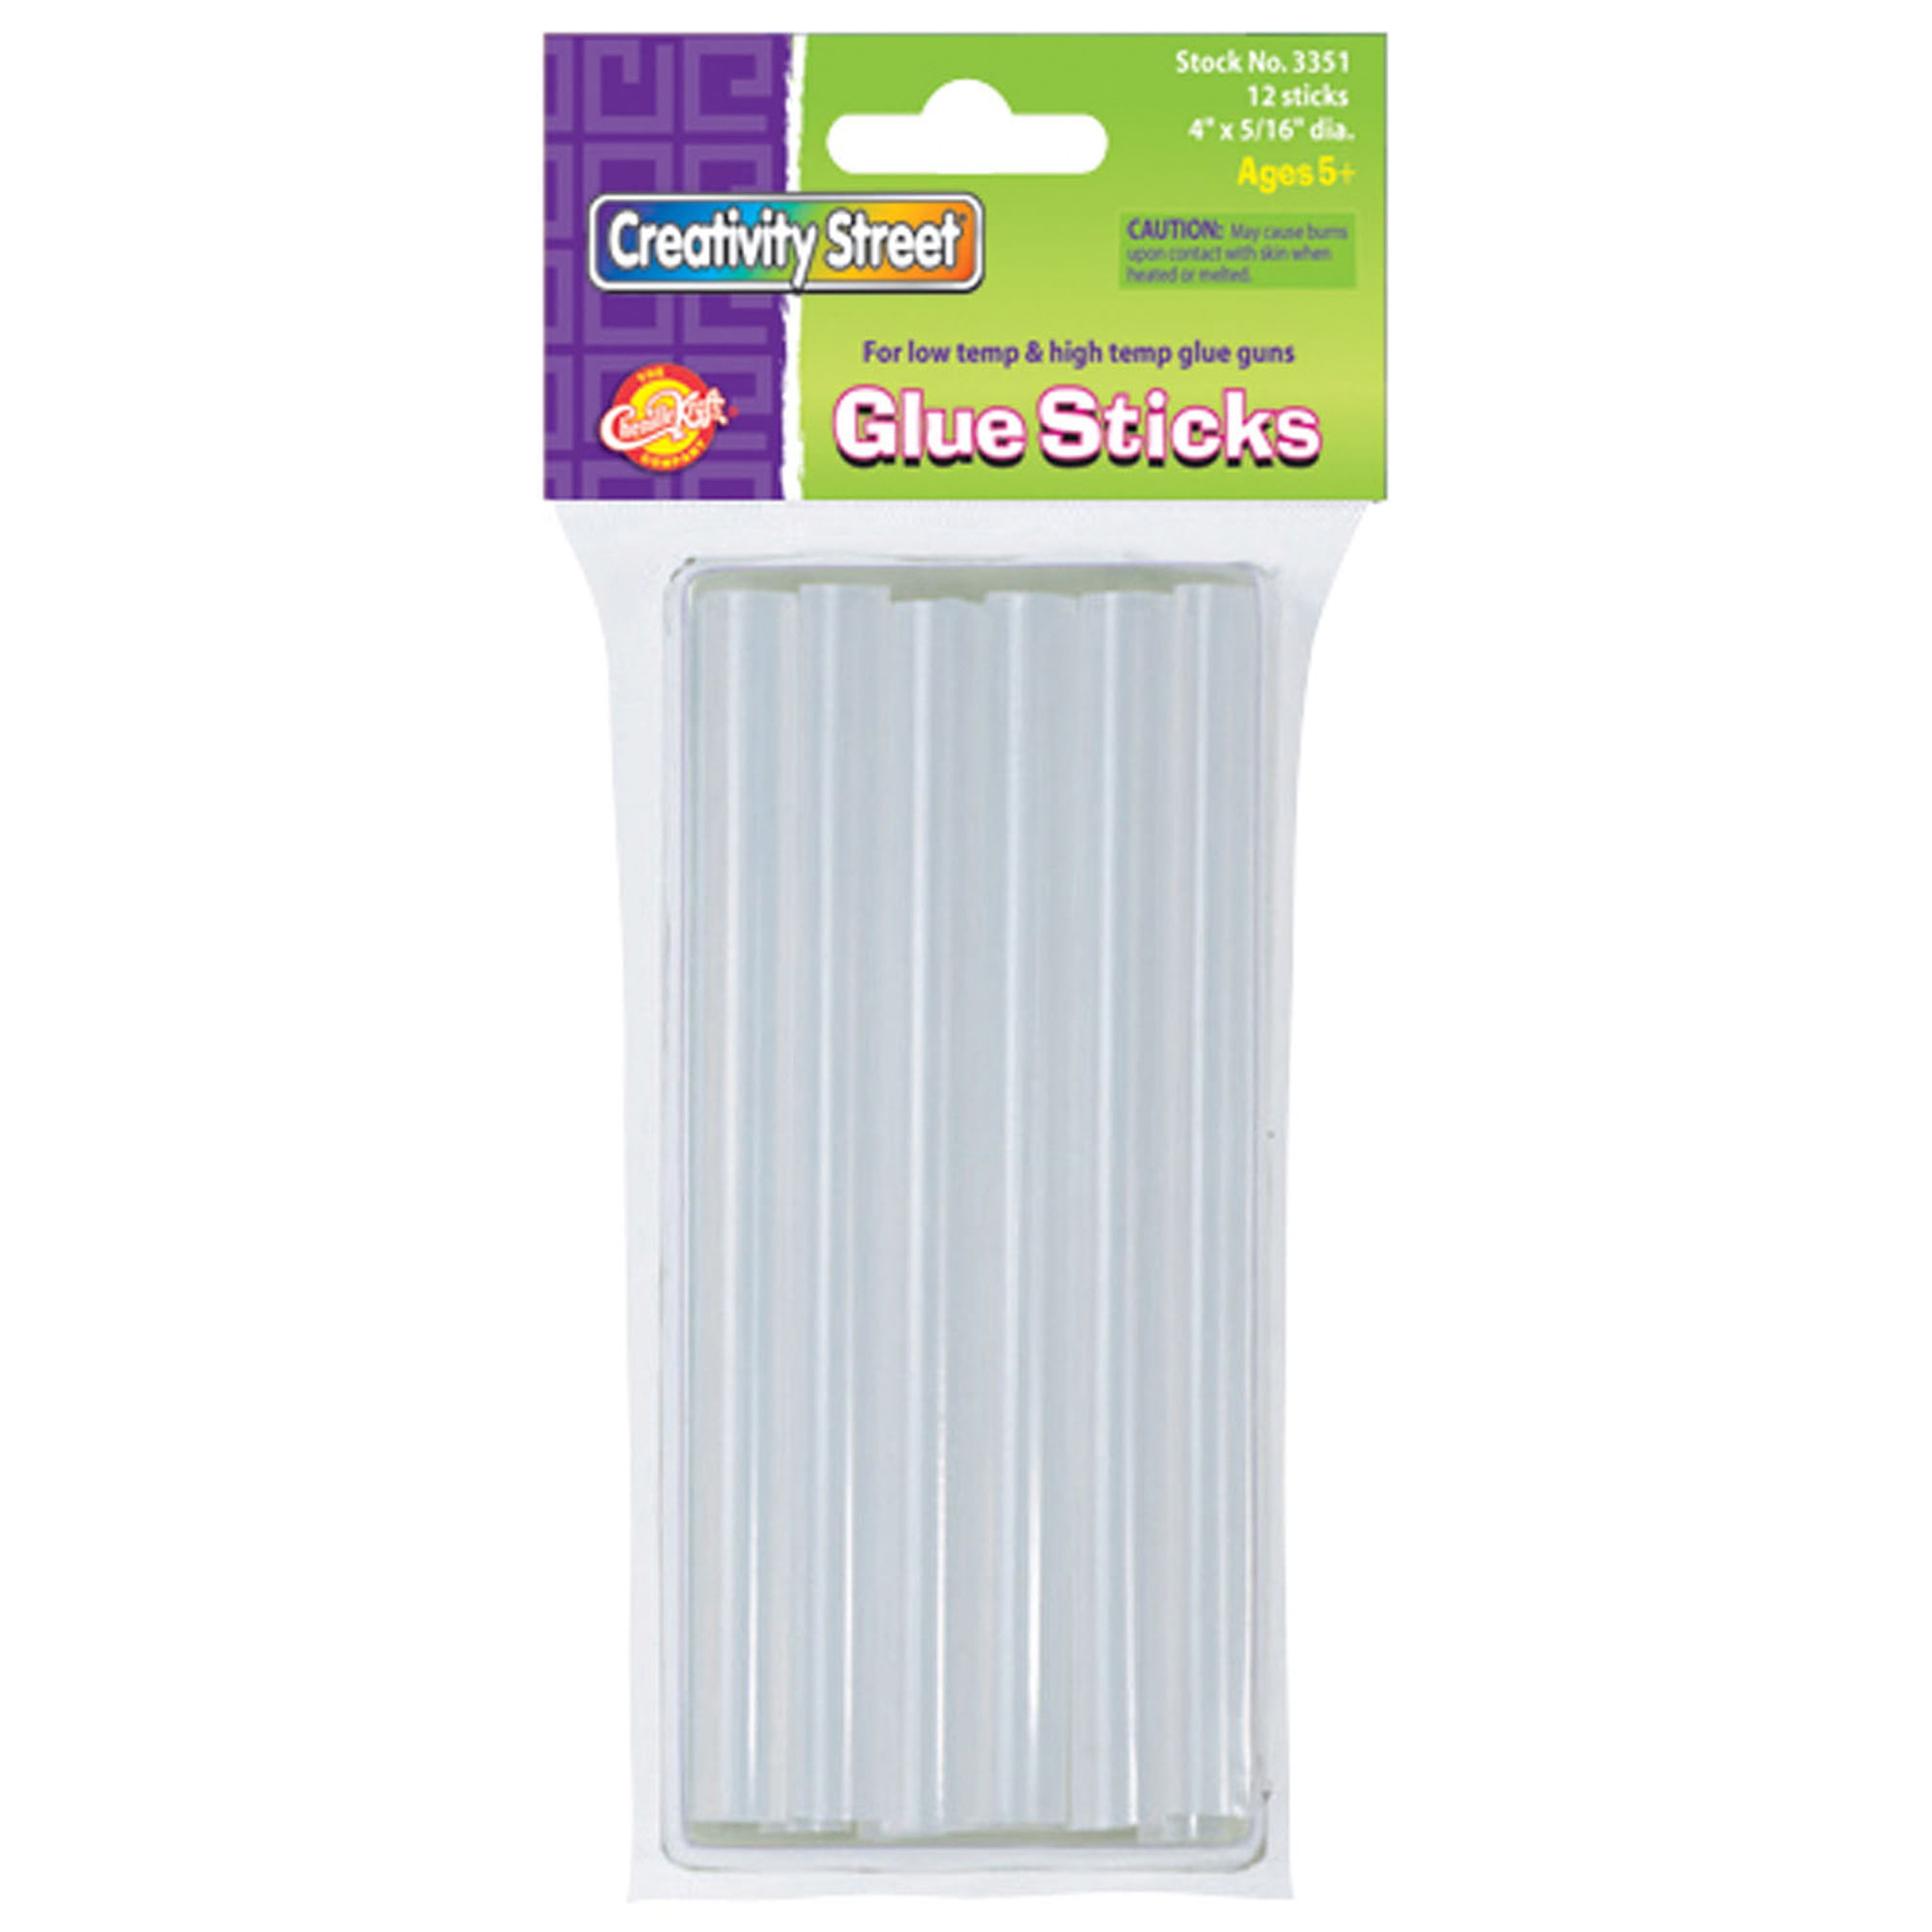 Creativity Street Hot Glue Sticks, 12 per Pack, 12 Packs